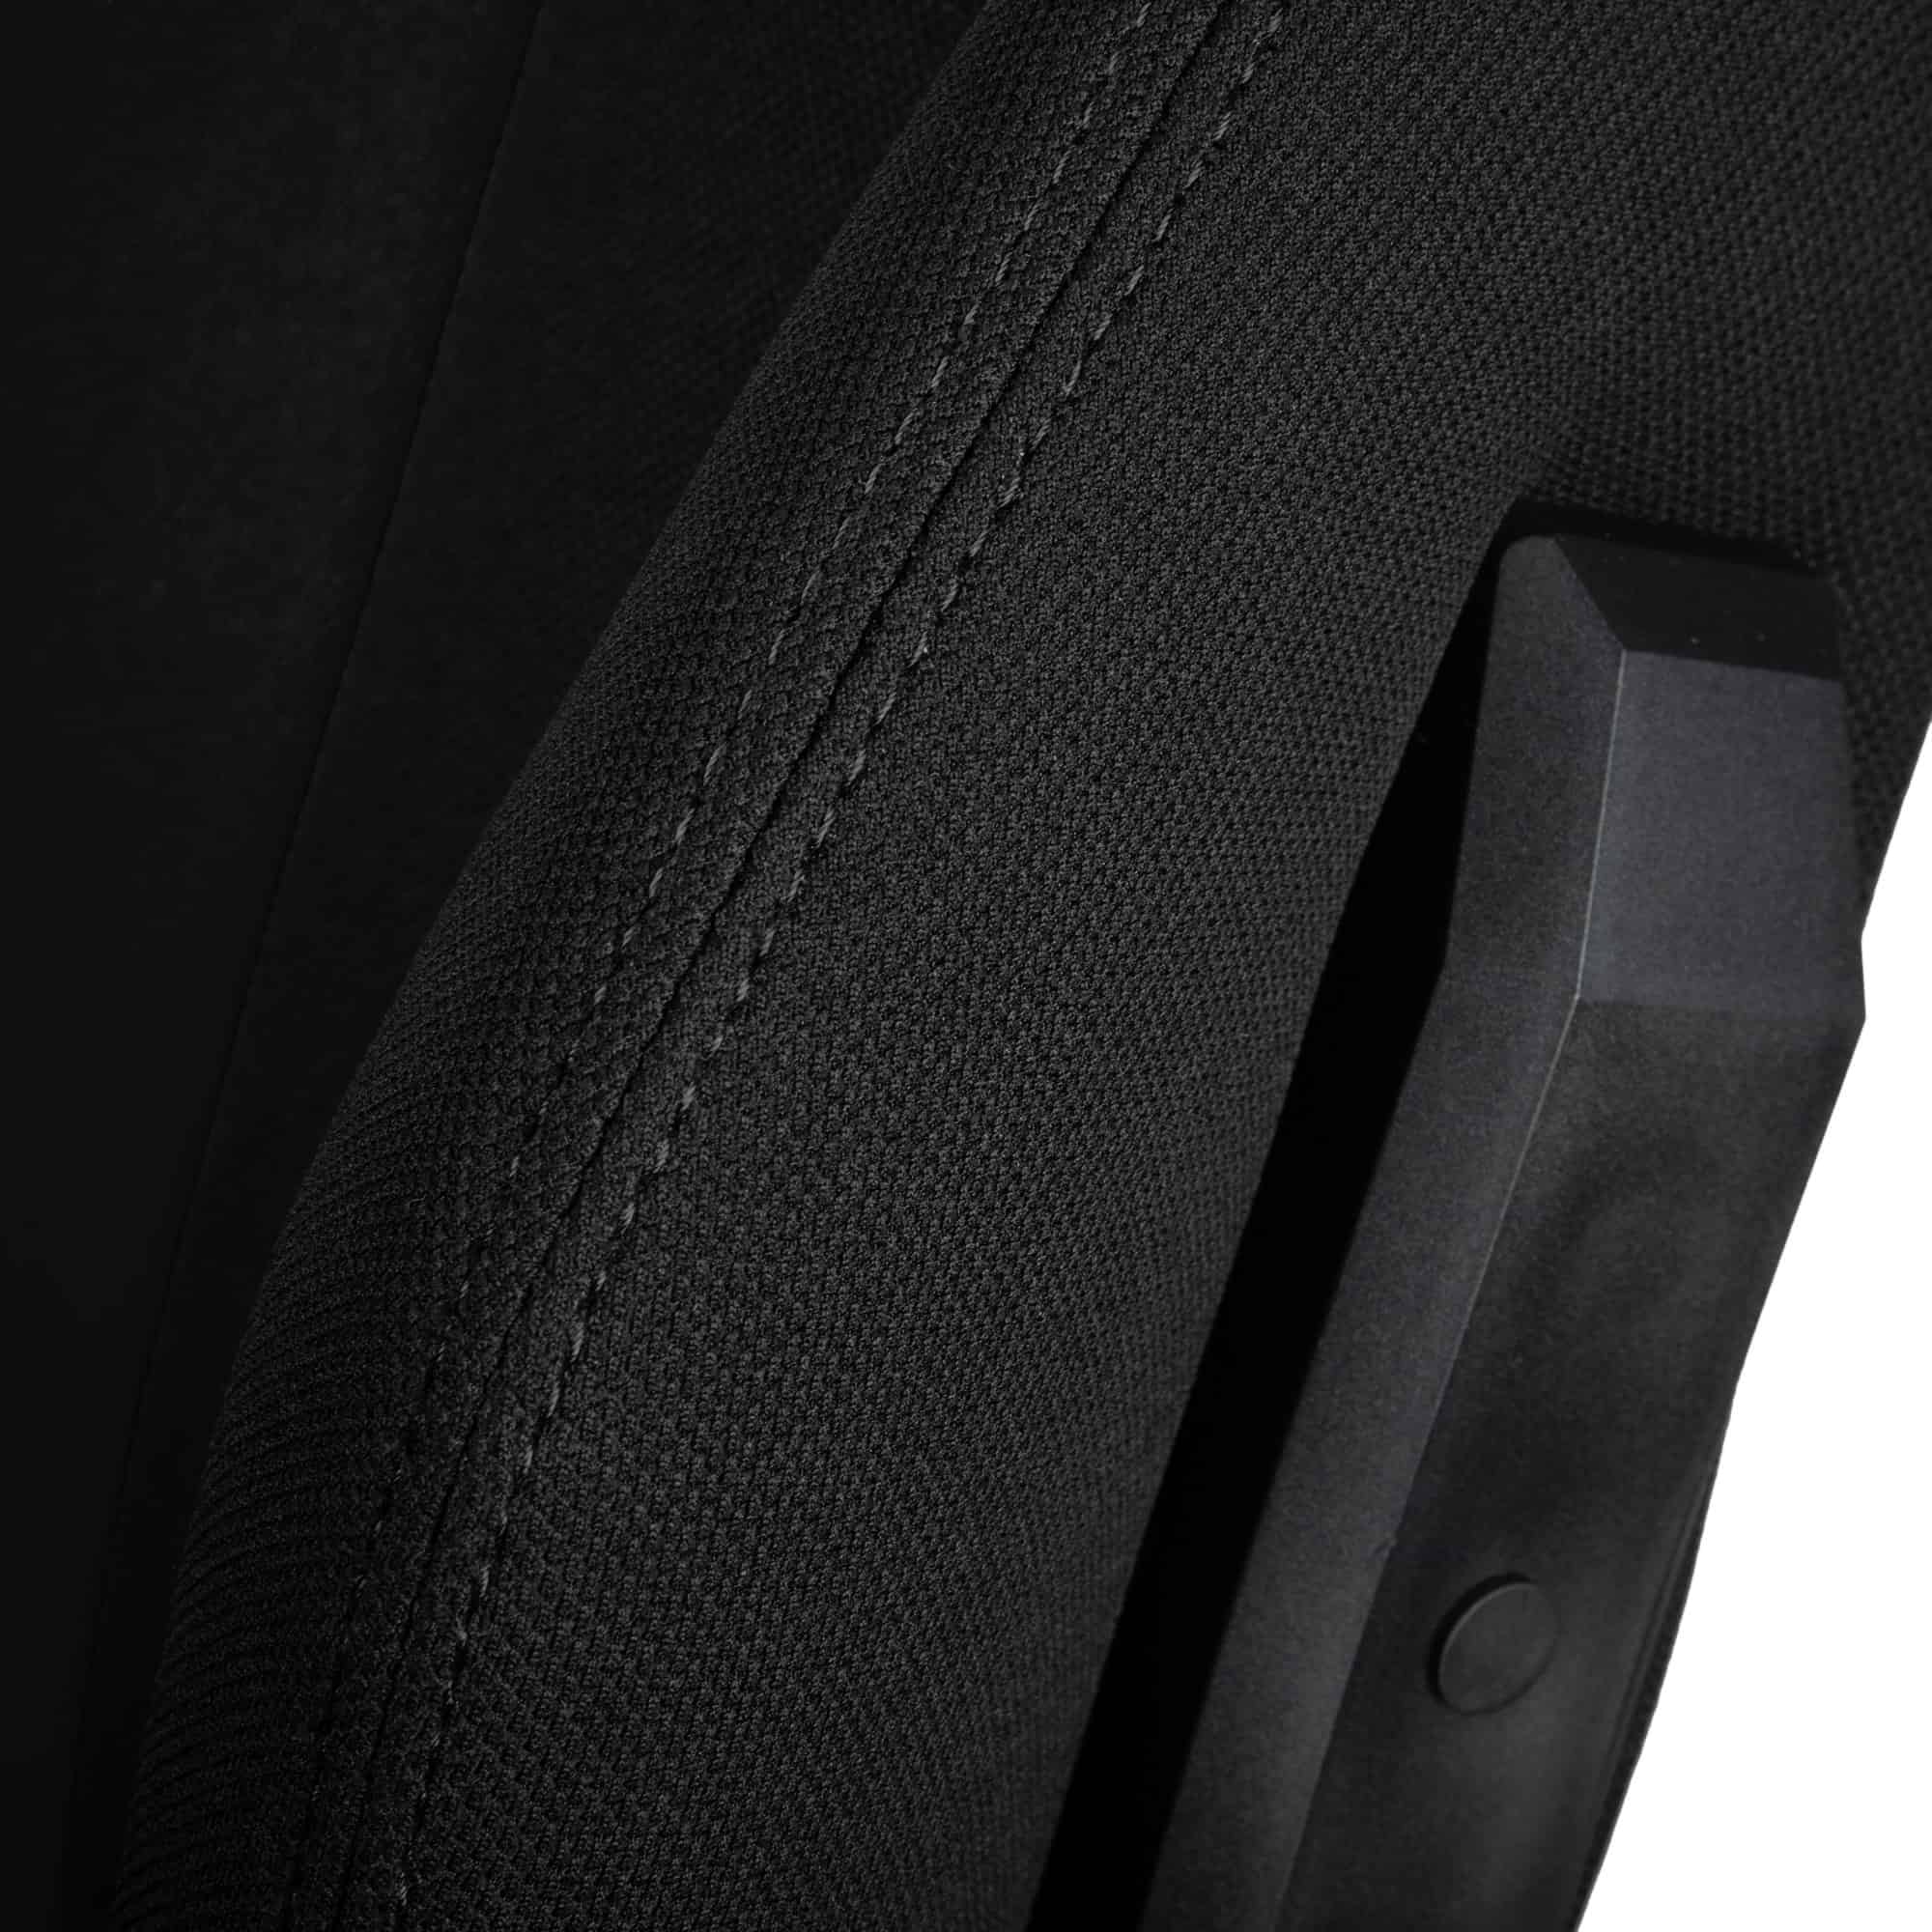 Gamer szék Nitro Concepts E250 Fekete